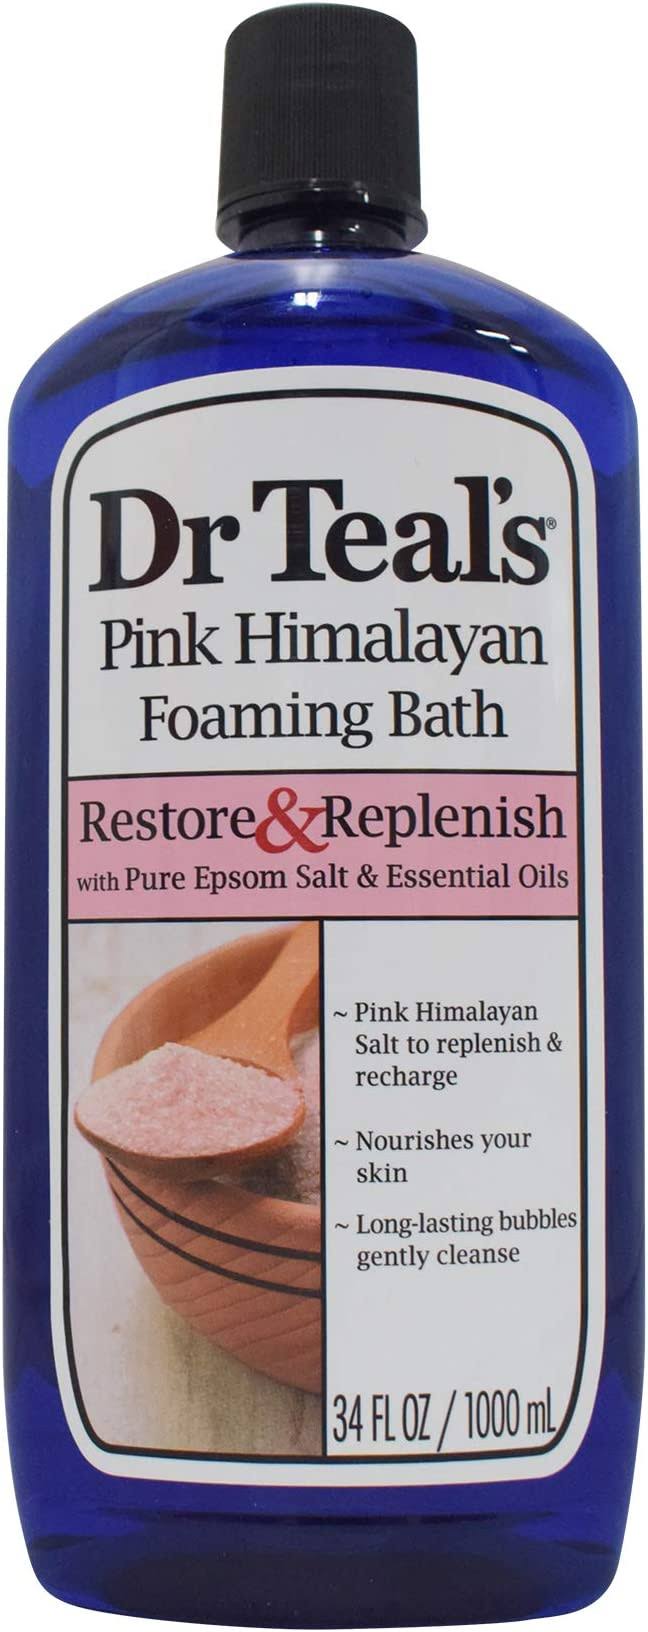 Dr Teal's Restore & Replenish Pink Himalayan Foaming Bath - 34oz